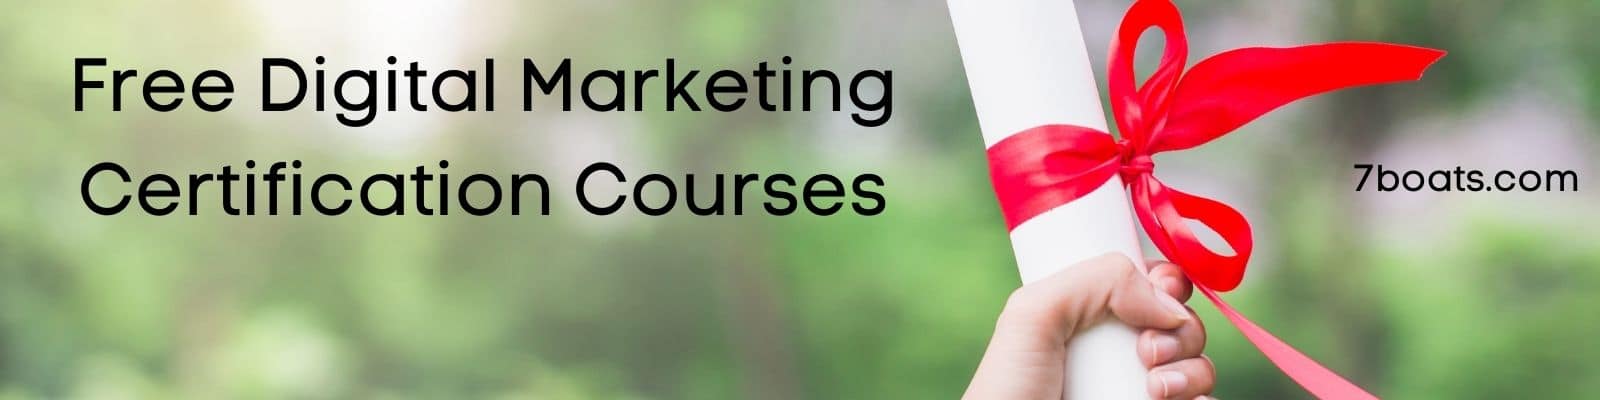 Best Free Digital Marketing Certification Courses